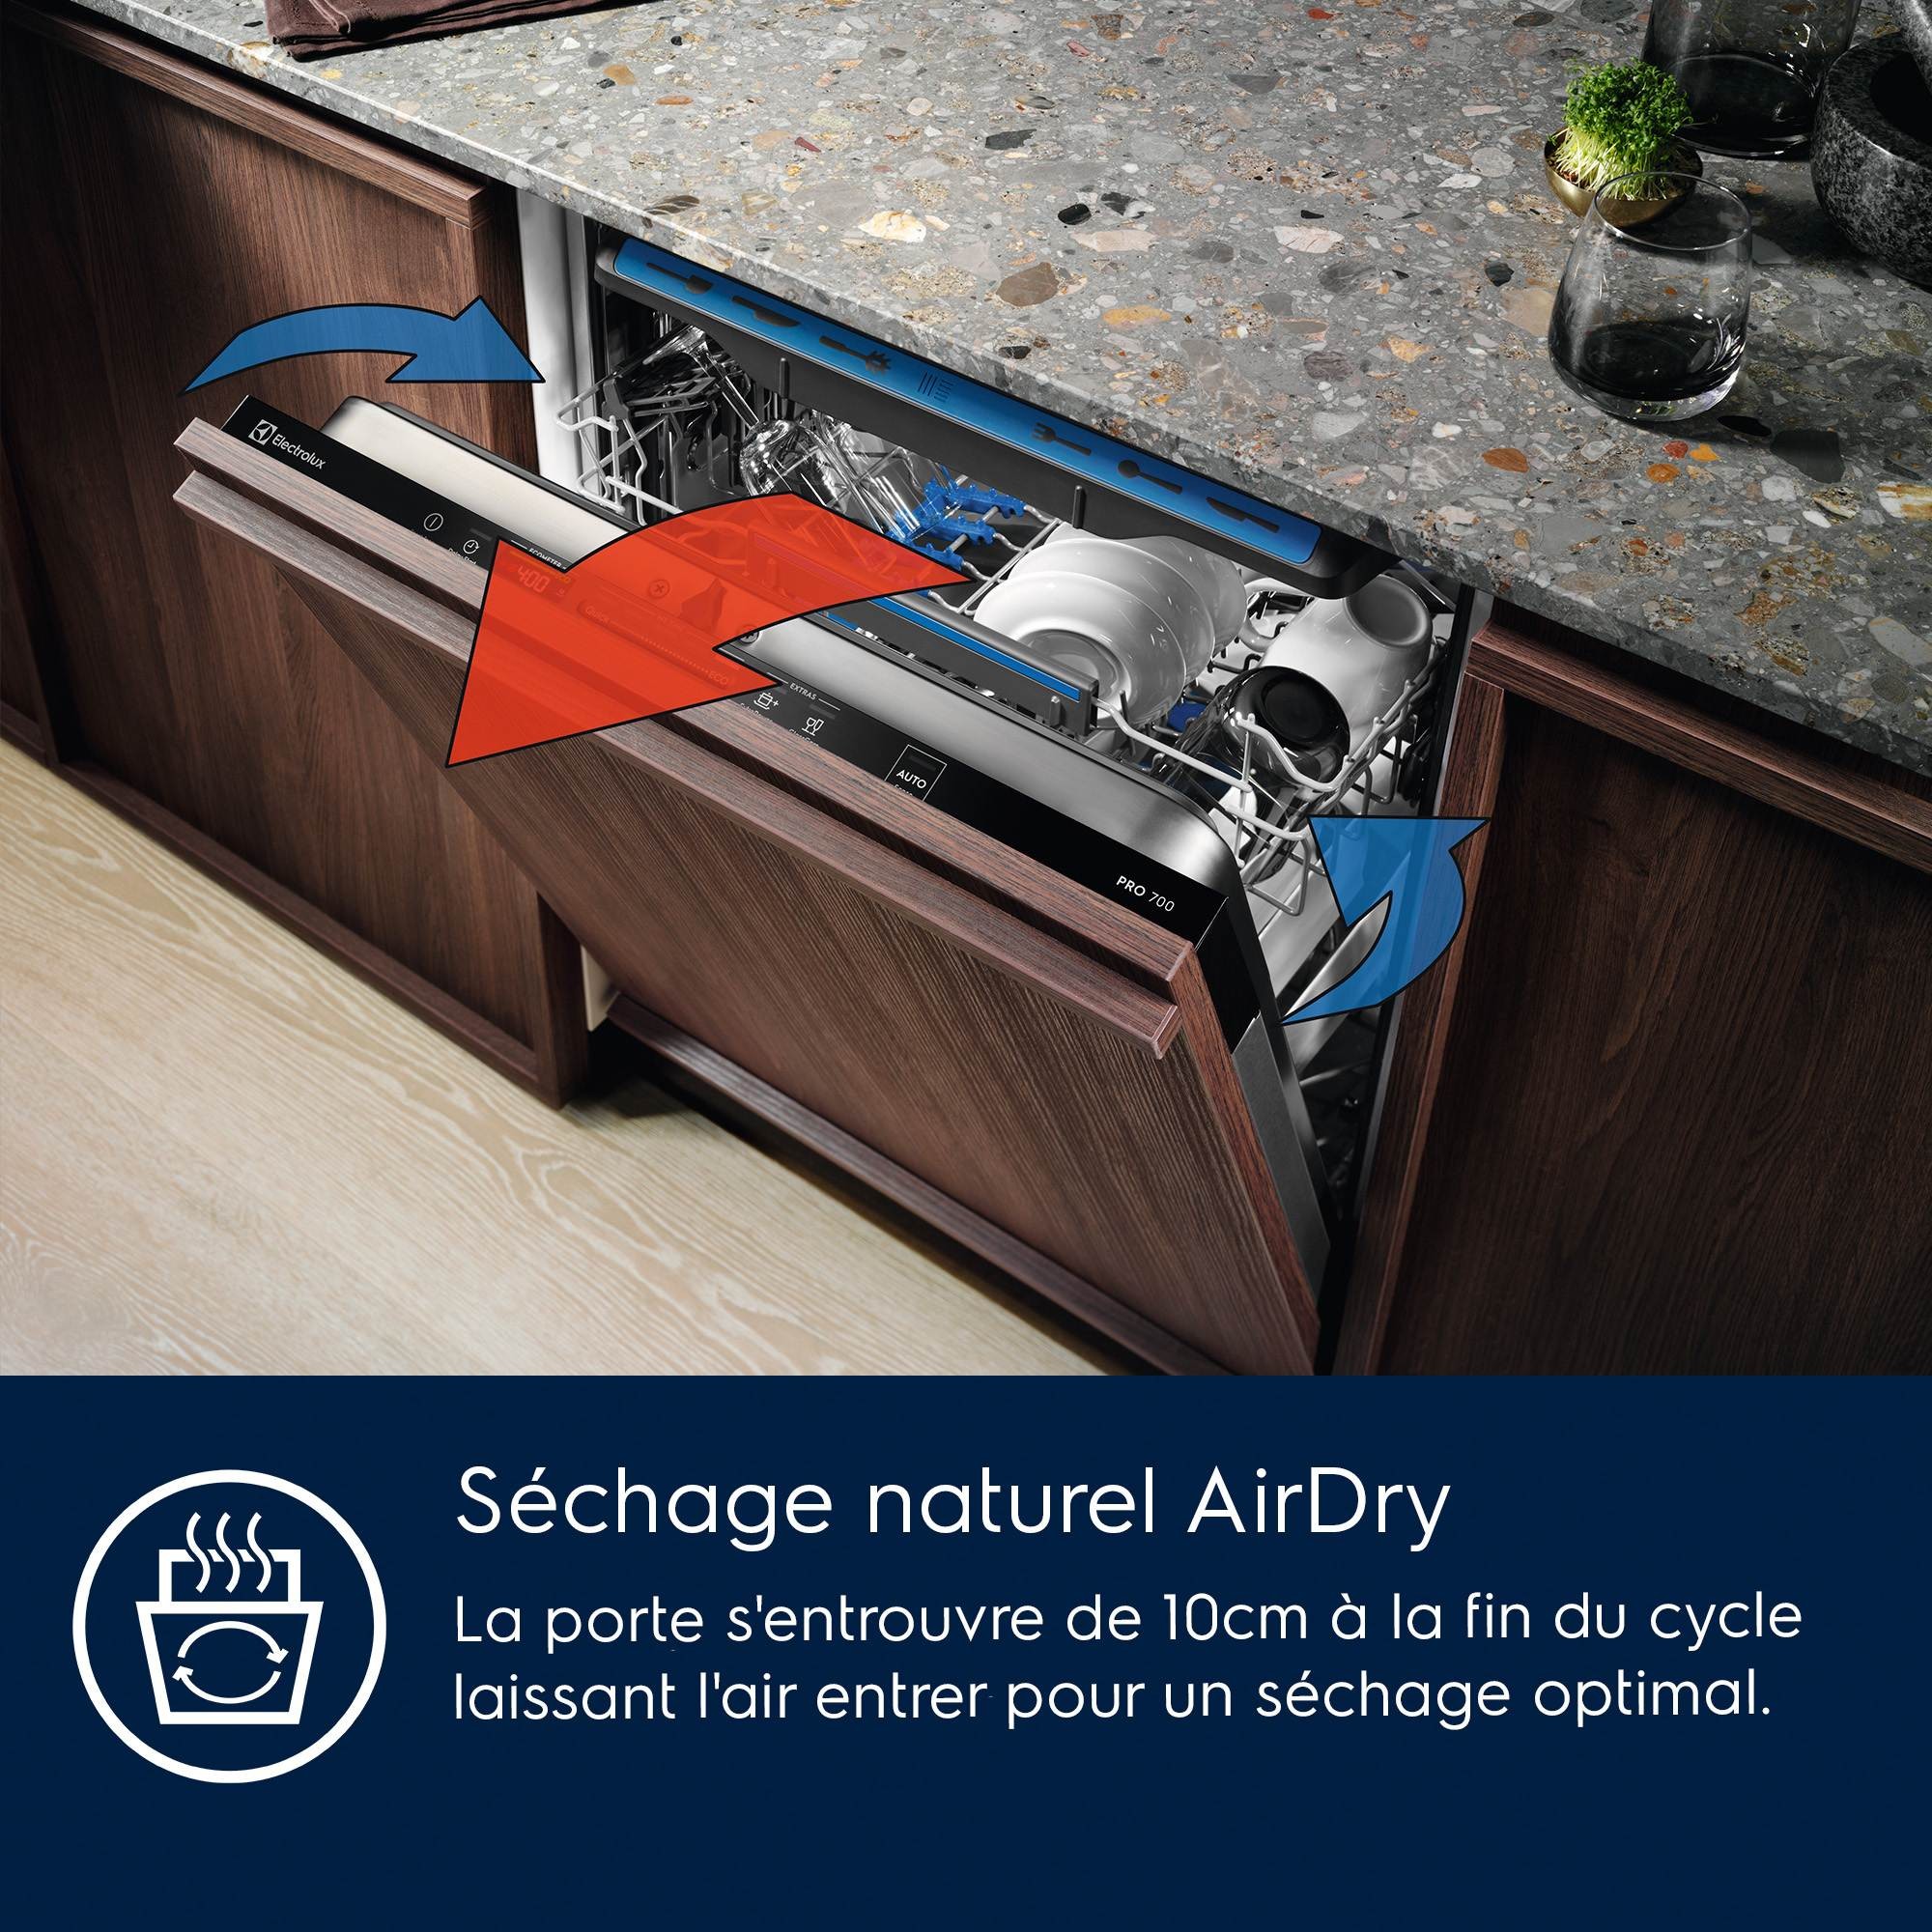 FAURE Lave vaisselle integrable 60 cm 5 programmes AirDry 47dB 13 couverts - FDSN151X3